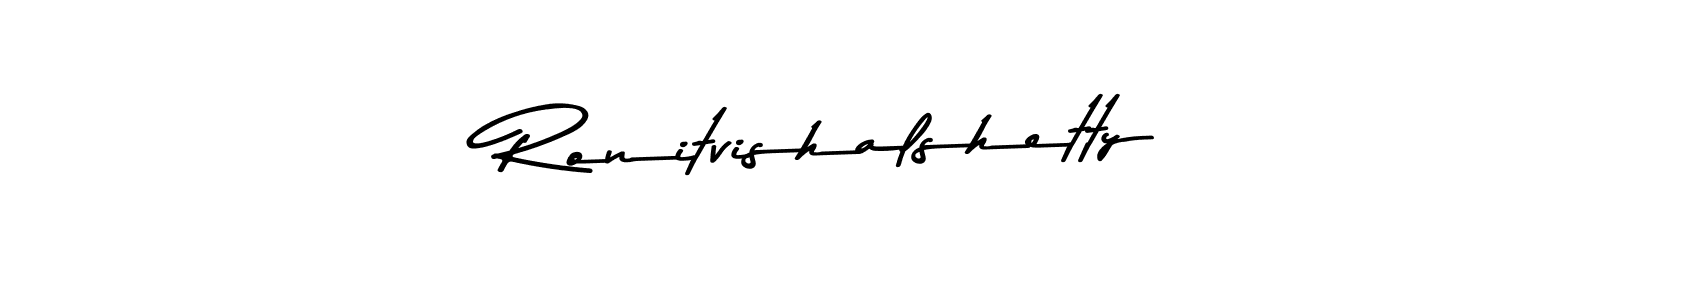 How to Draw Ronitvishalshetty signature style? Asem Kandis PERSONAL USE is a latest design signature styles for name Ronitvishalshetty. Ronitvishalshetty signature style 9 images and pictures png